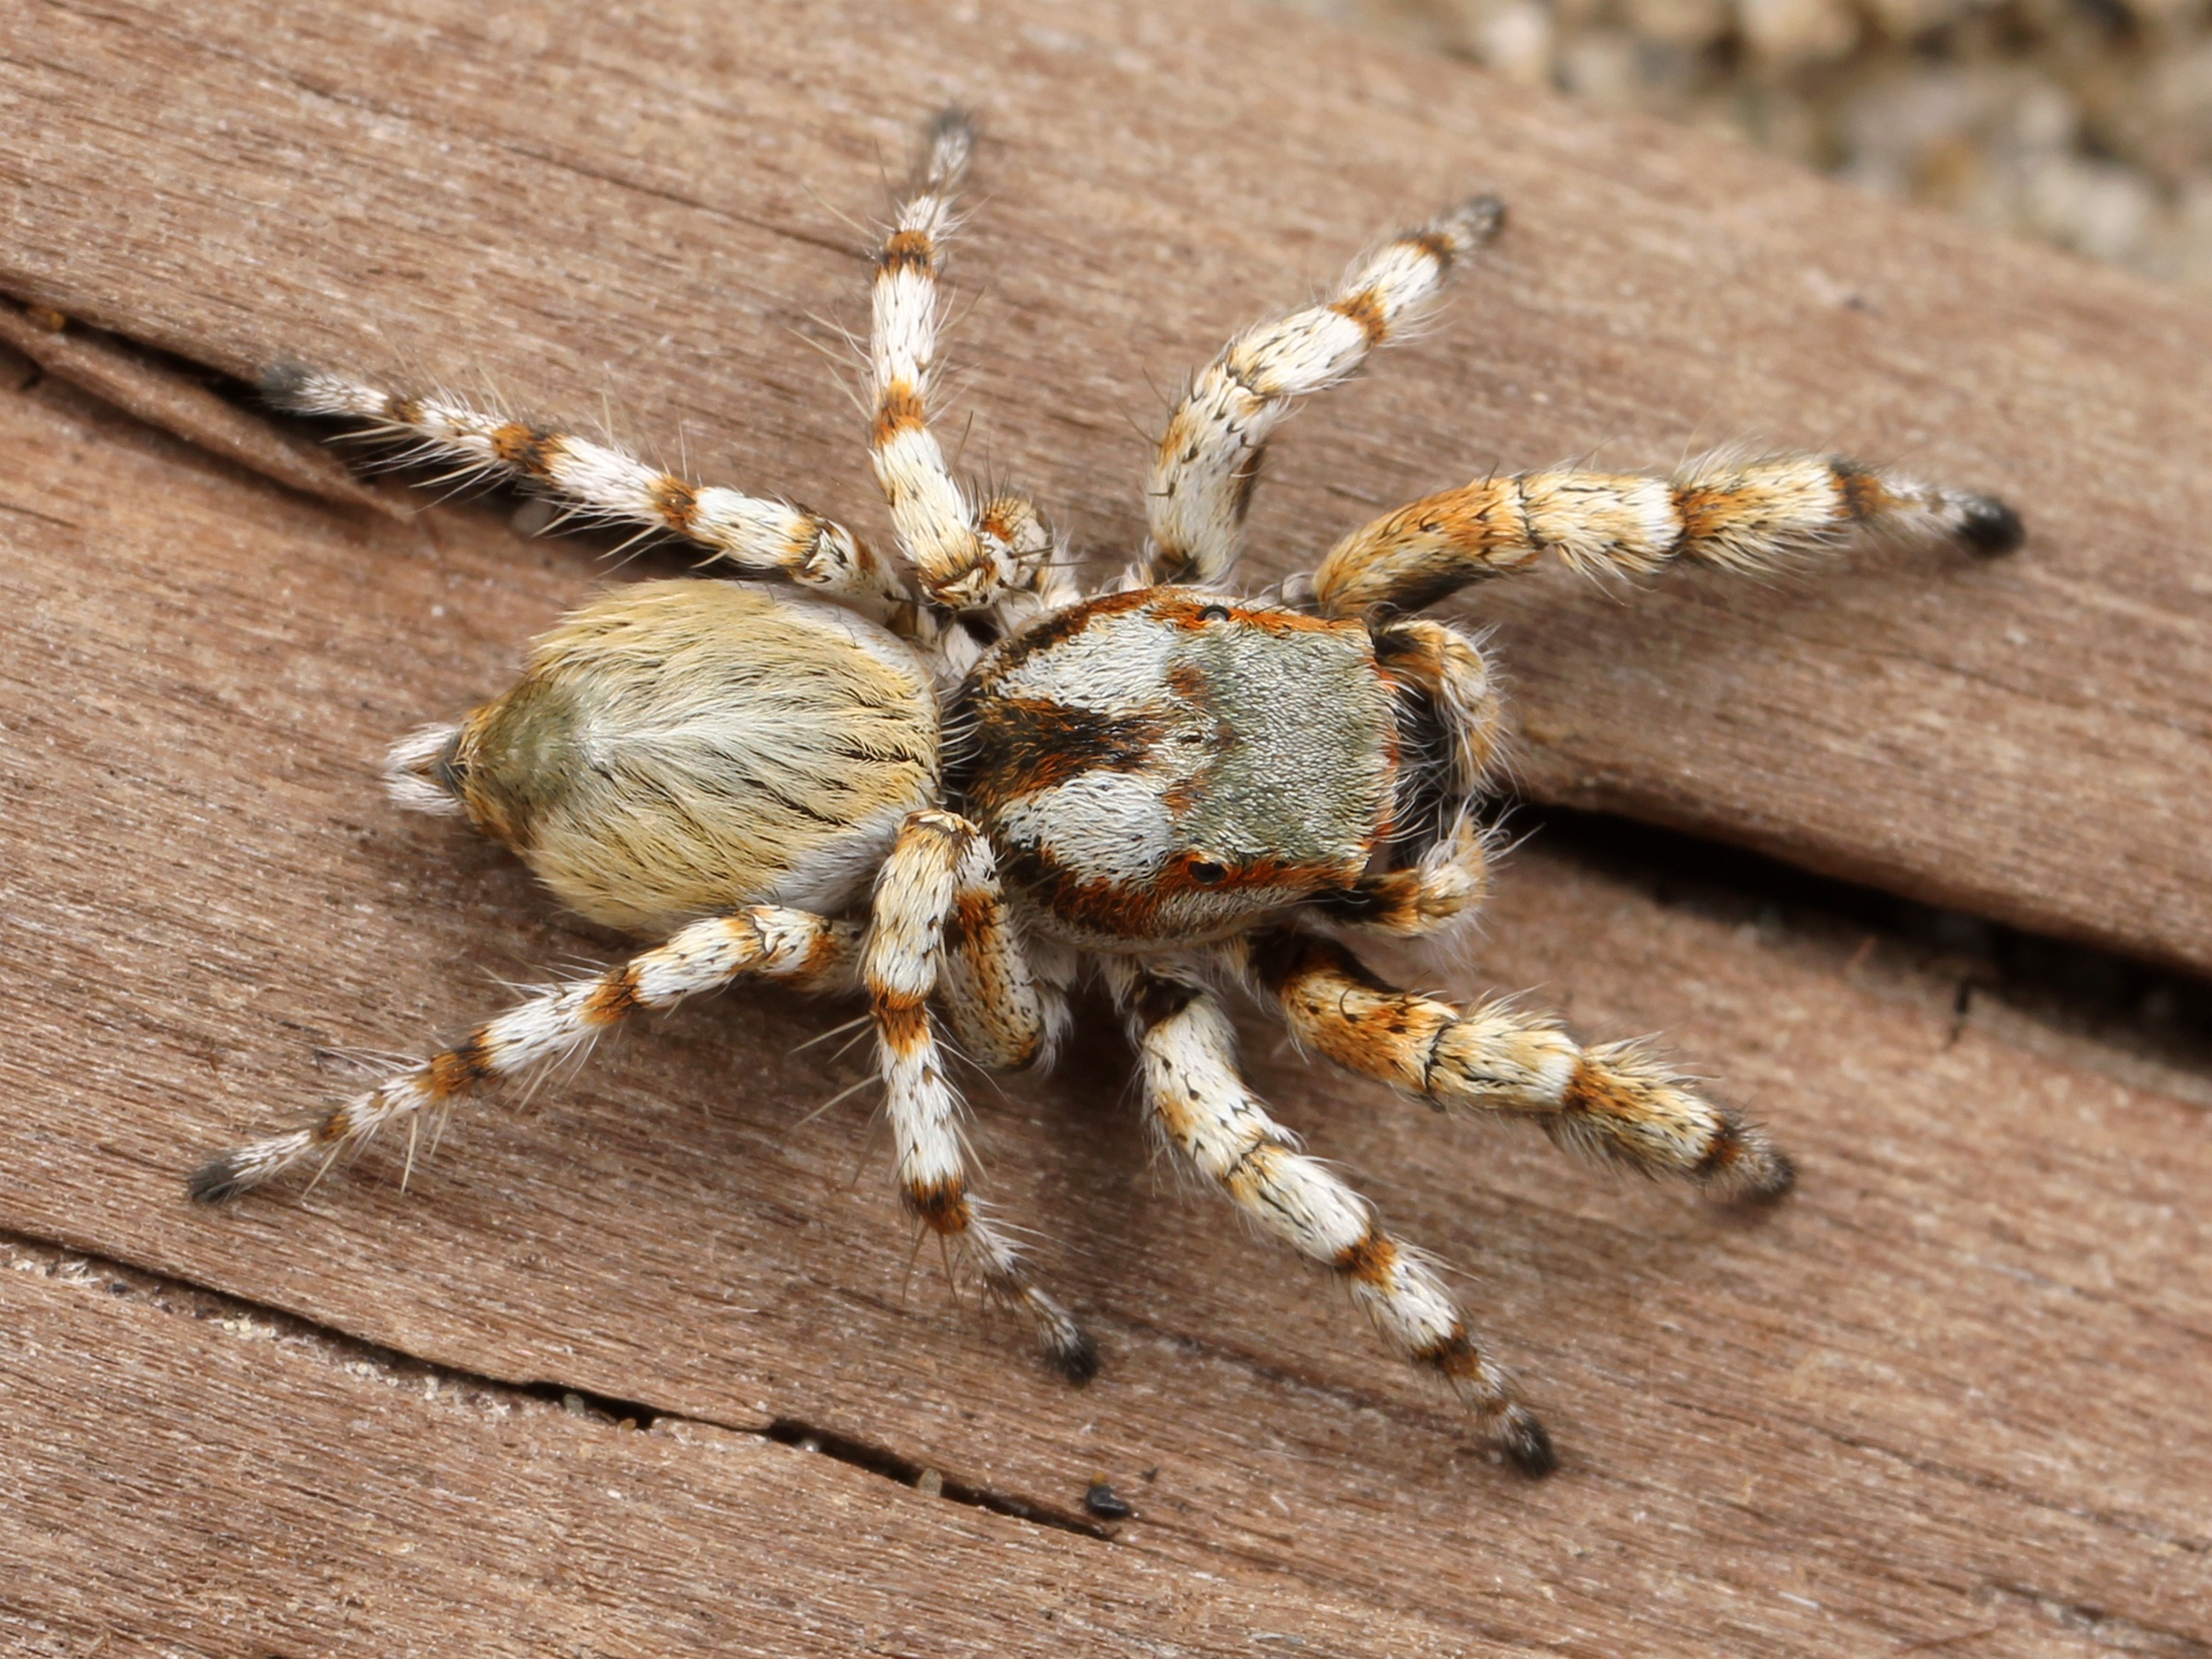 Adult male Habronattus amicus jumping spider by Ryan Kaldari